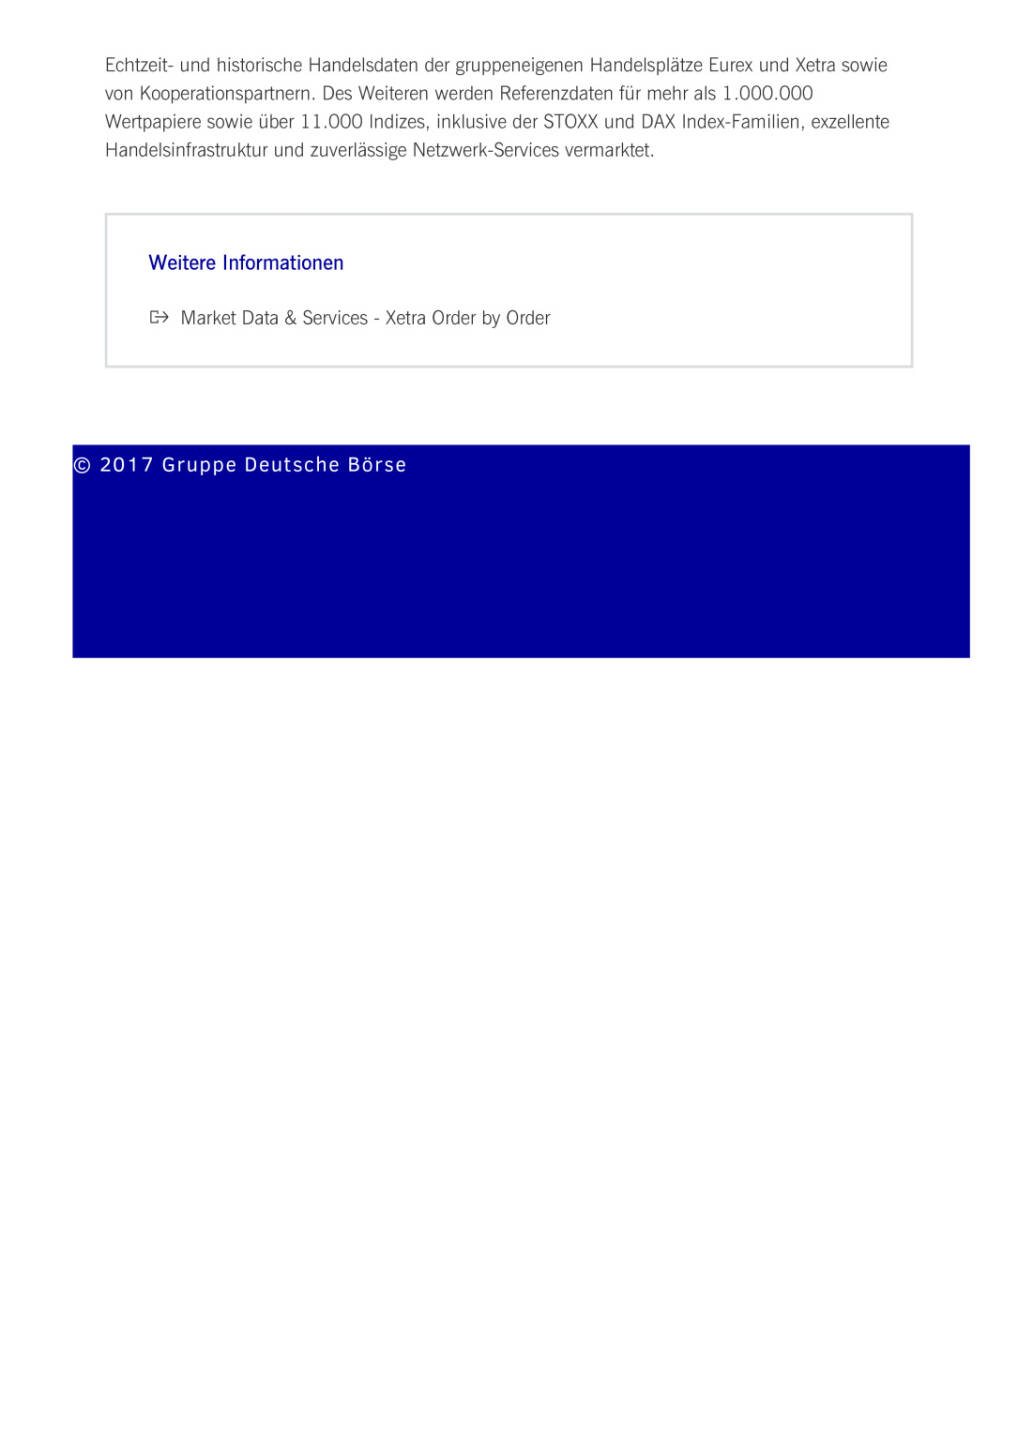 Neuer Marktdatenfeed gibt Einblick in das gesamte Xetra-Orderbuch, Seite 2/2, komplettes Dokument unter http://boerse-social.com/static/uploads/file_2176_neuer_marktdatenfeed_gibt_einblick_in_das_gesamte_xetra-orderbuch.pdf